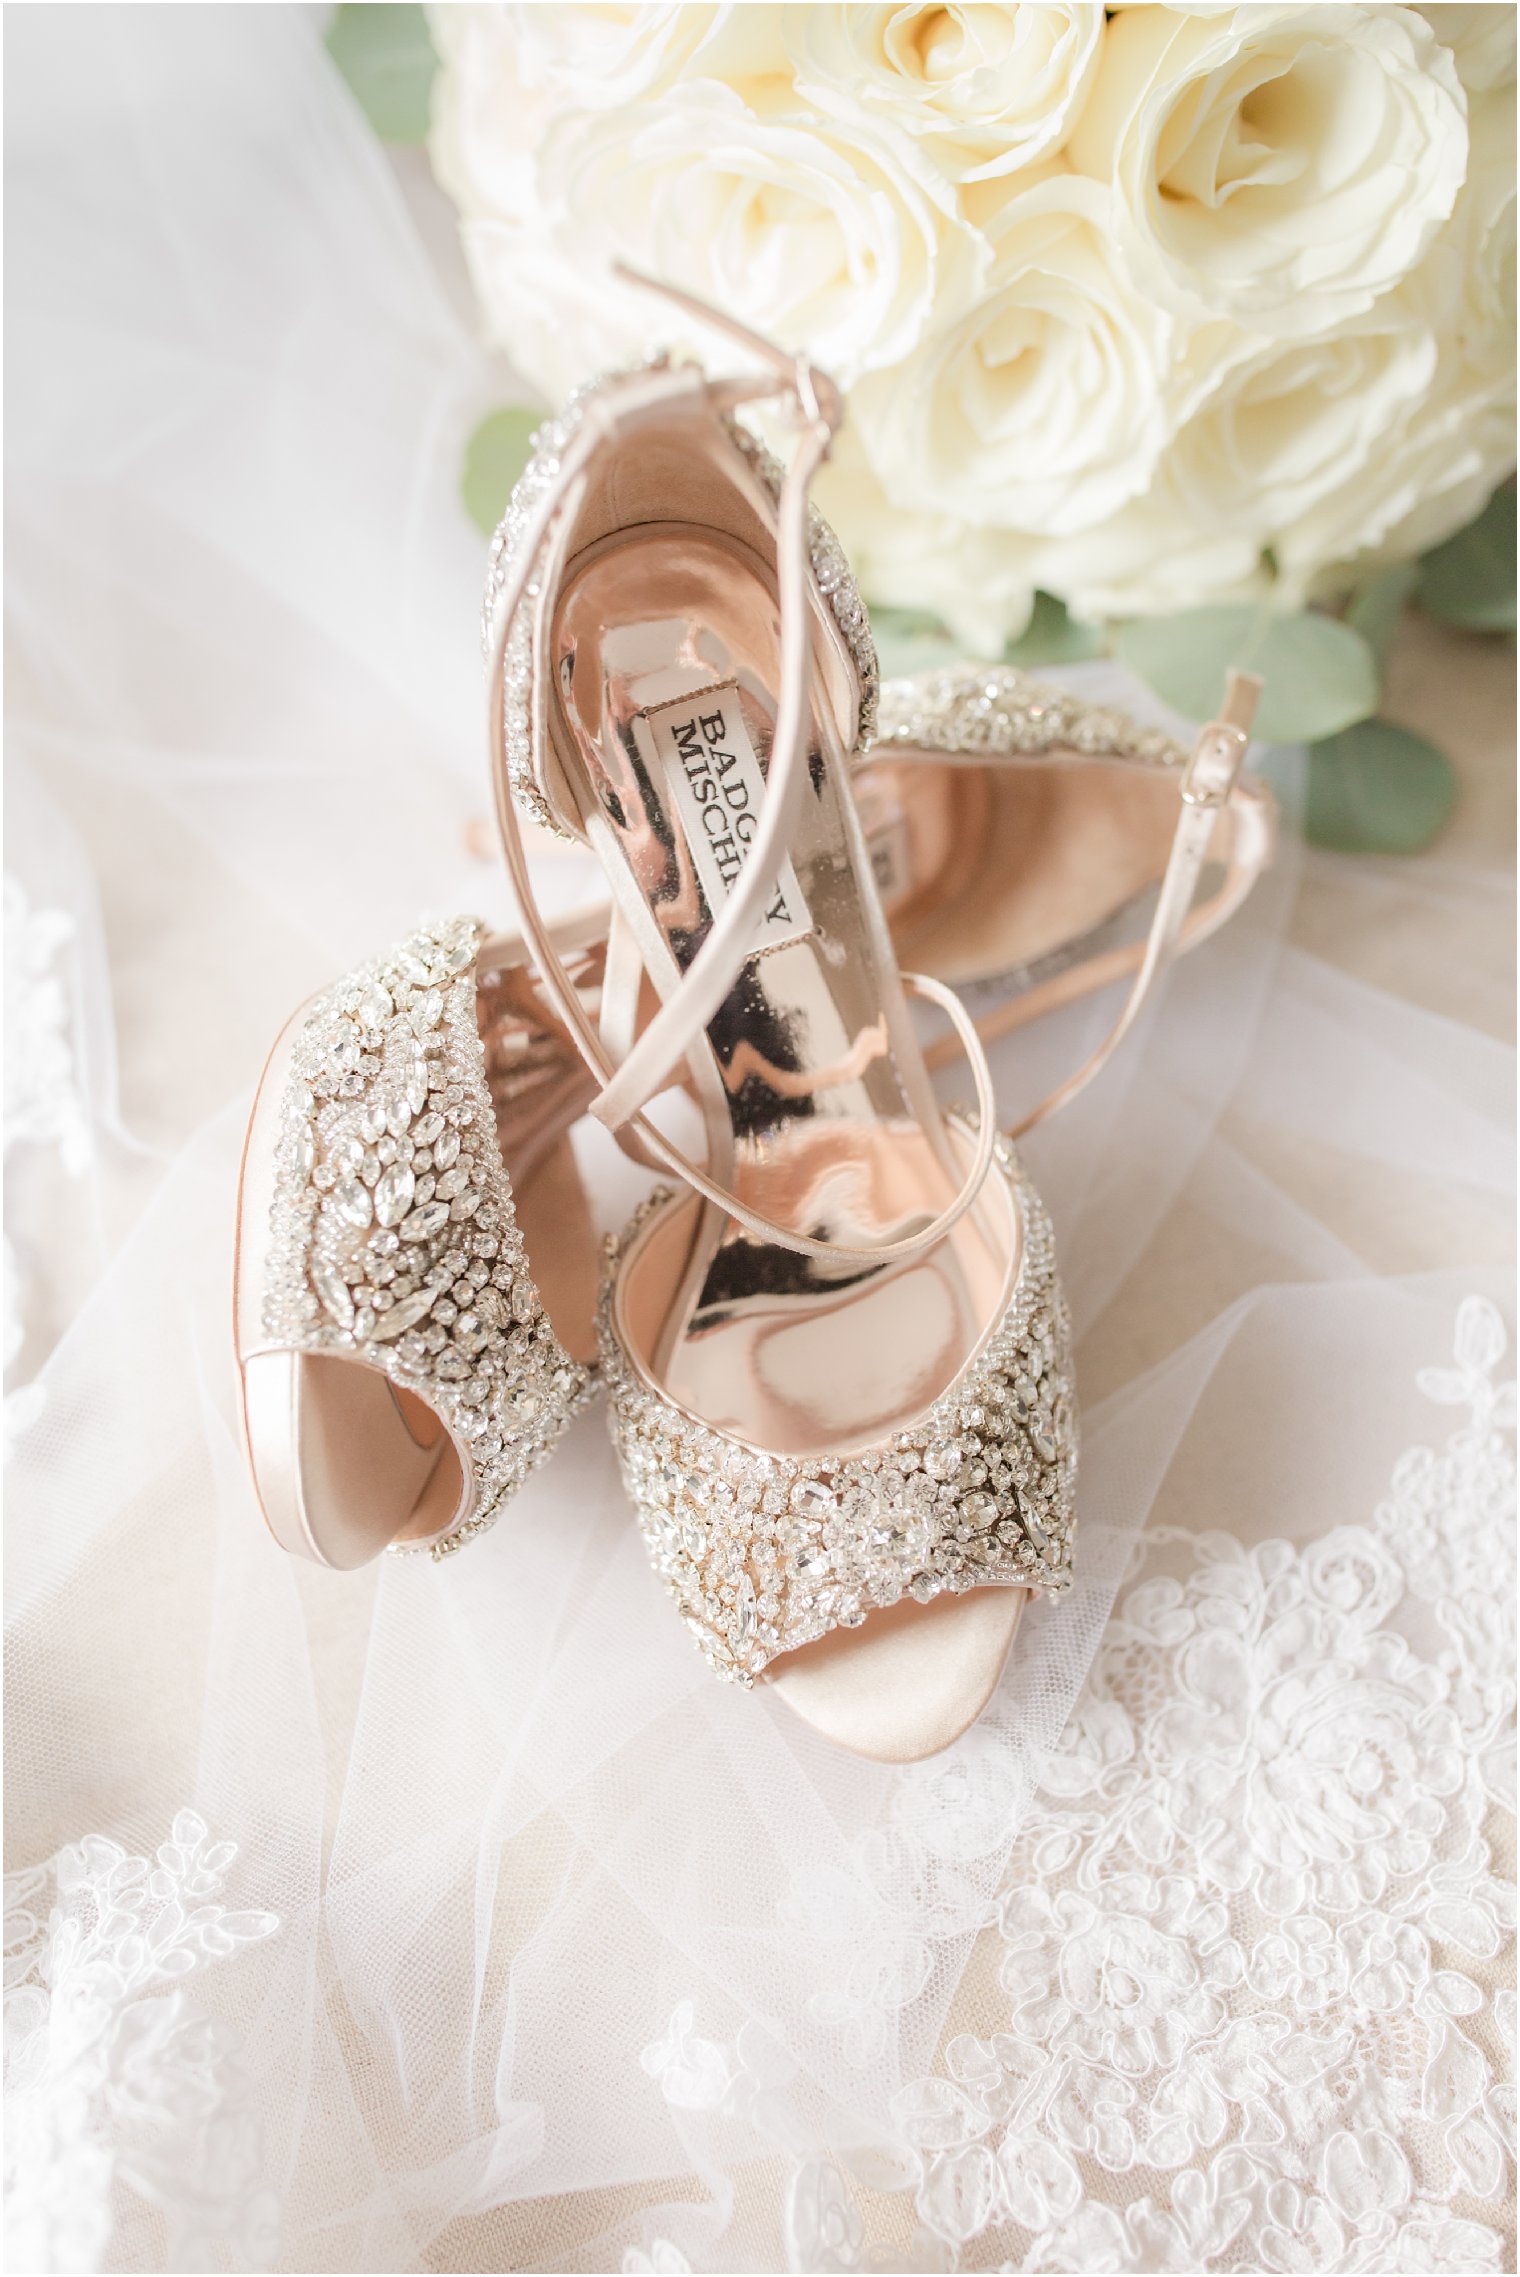 blush jeweled heels by Badgley Mischka photographed by Idalia Photography